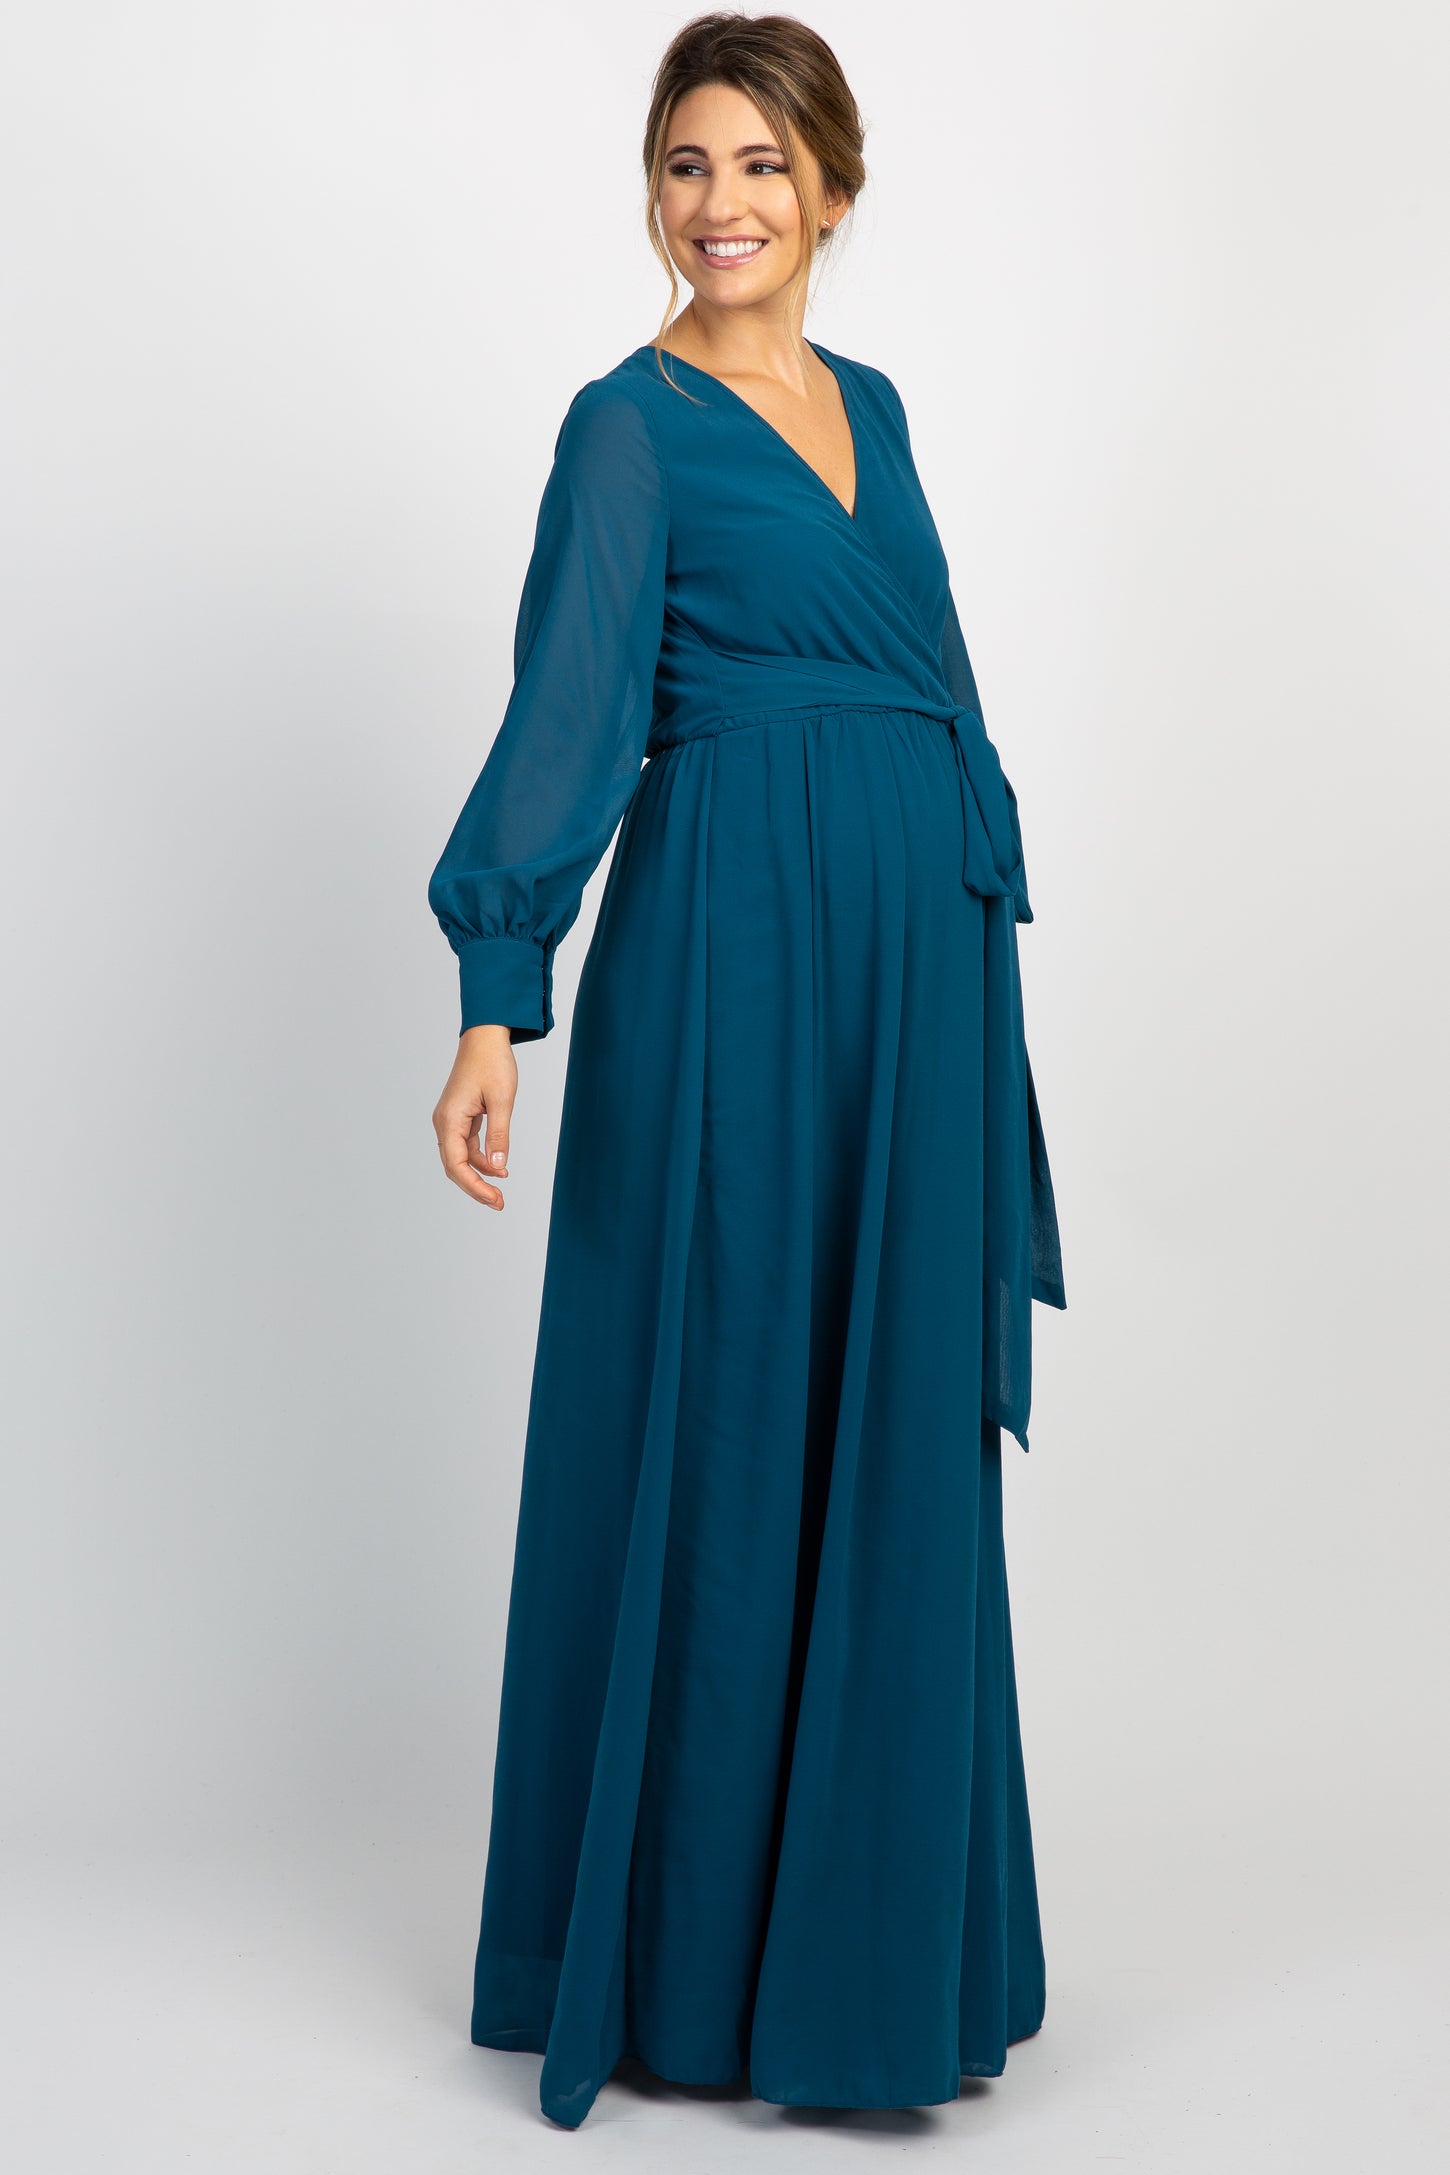 Teal Chiffon Long Sleeve Pleated Maternity Maxi Dress